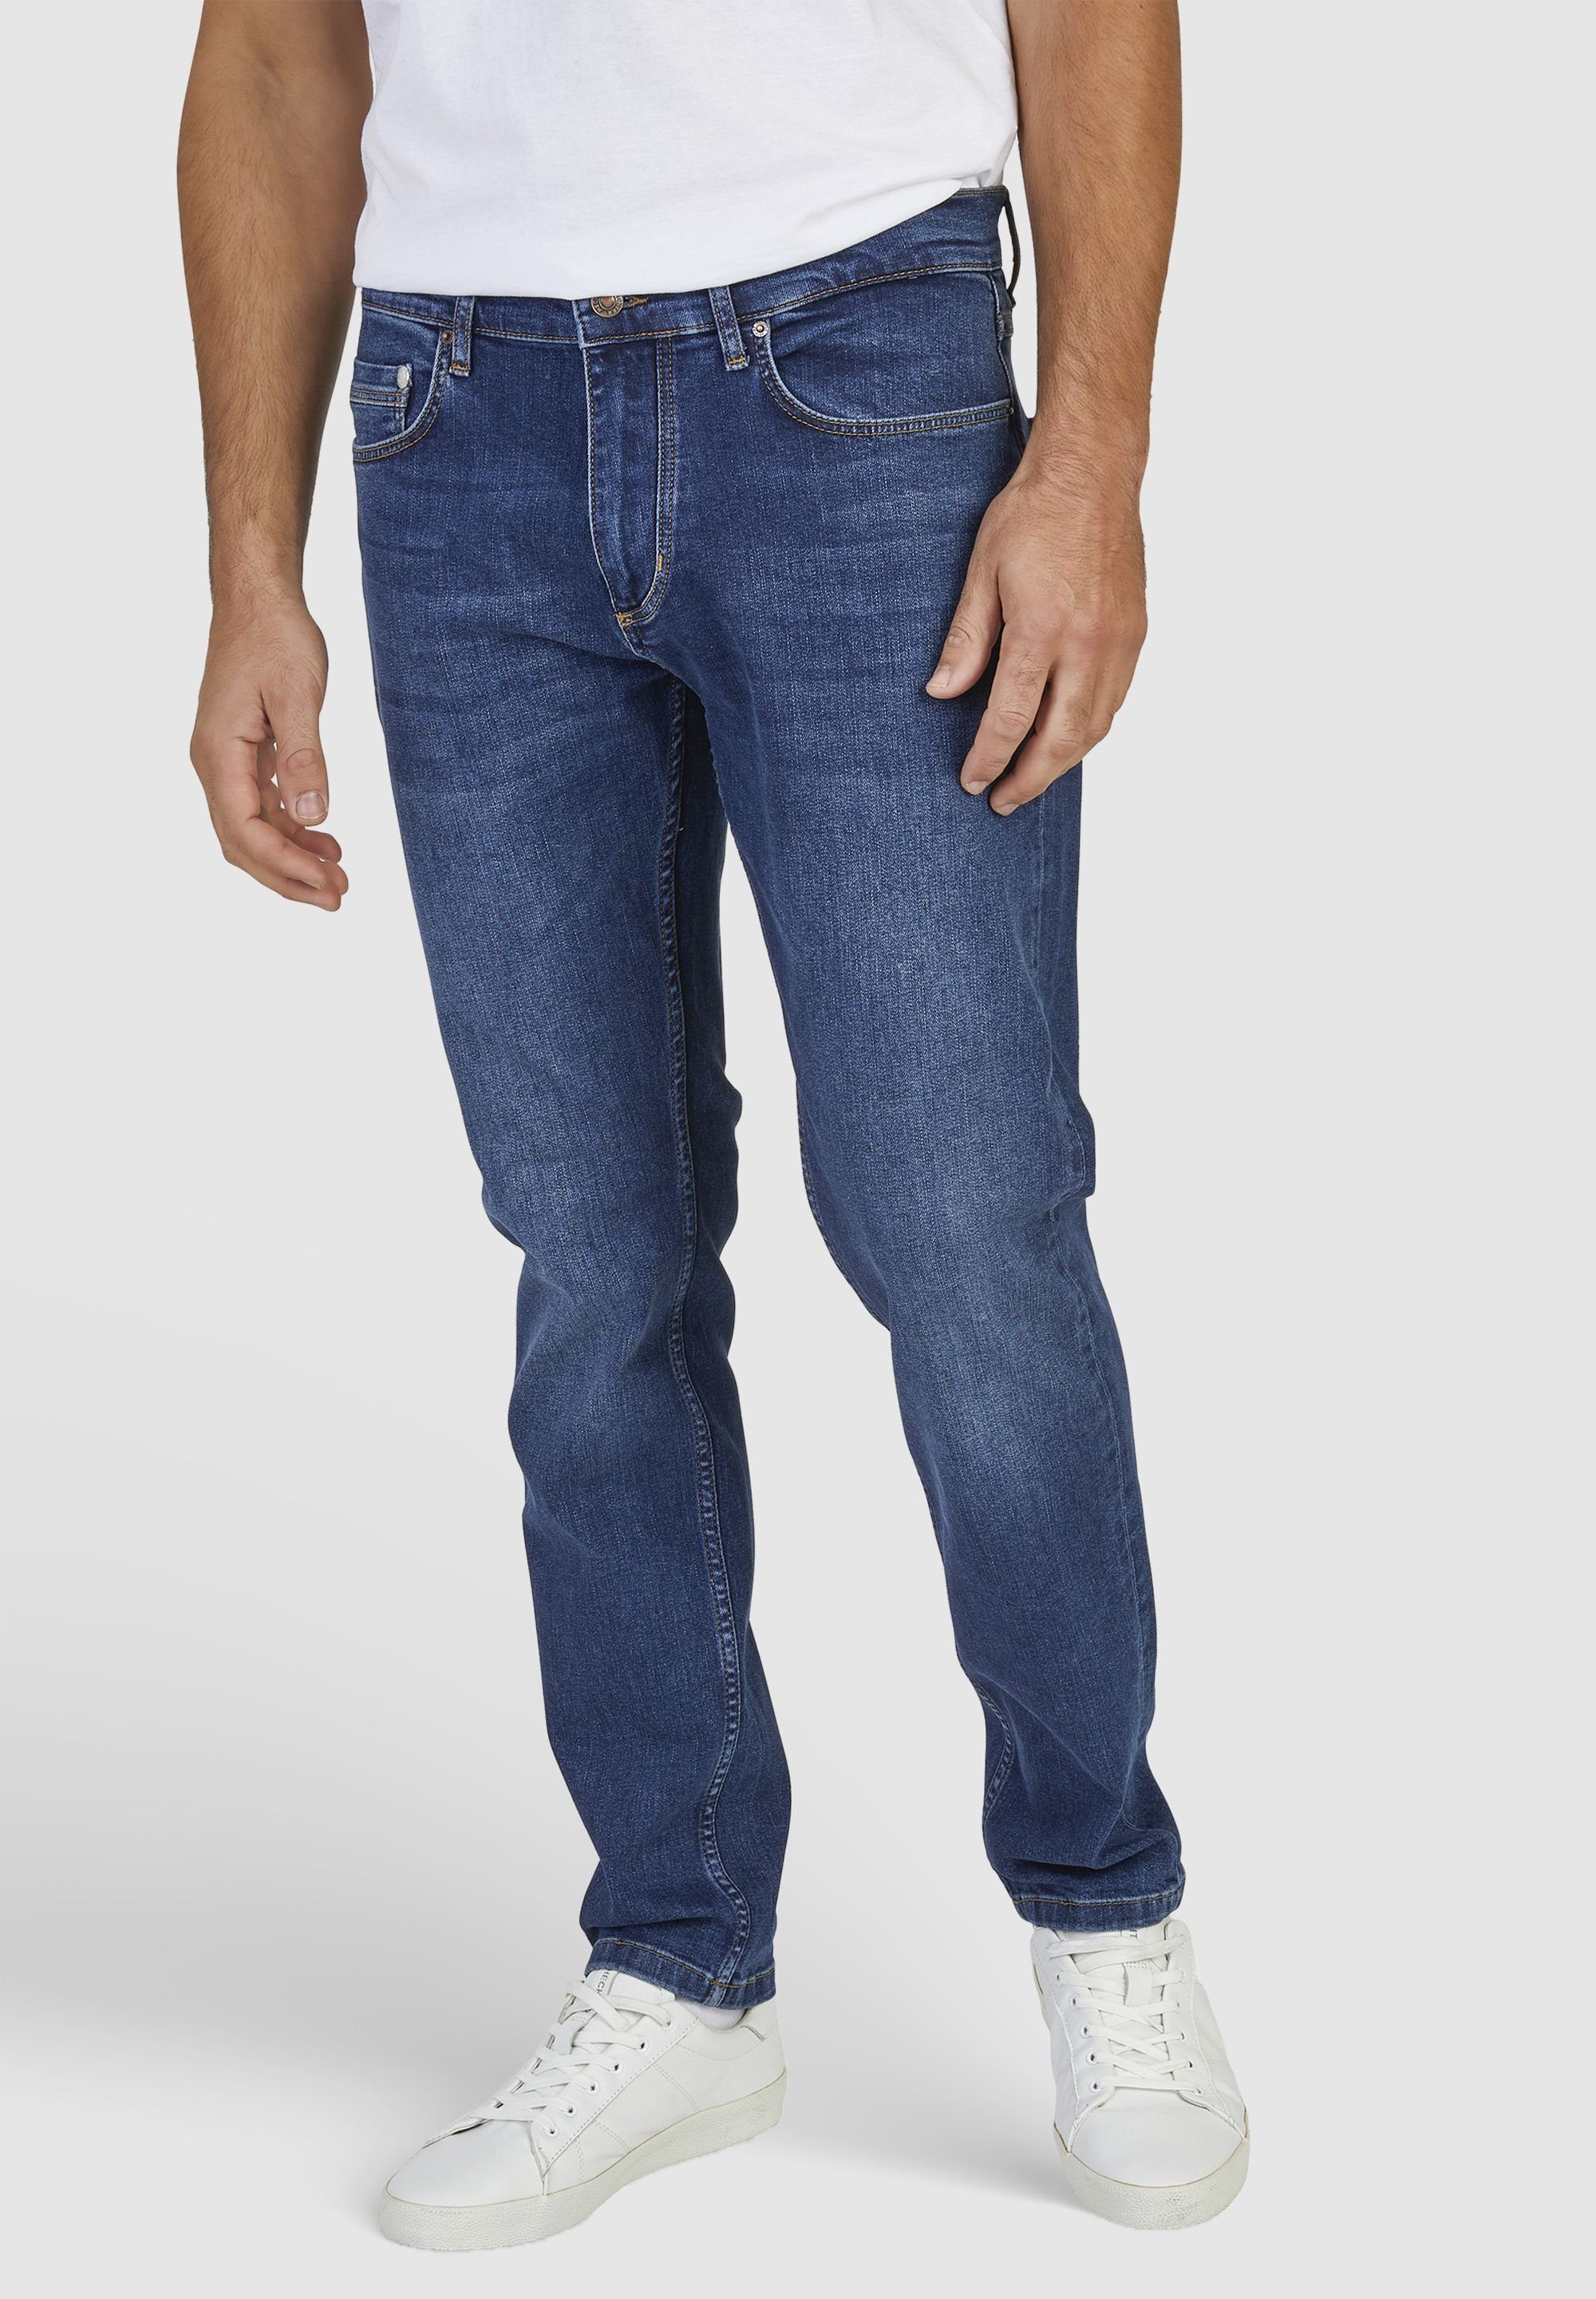 HECHTER PARIS 5-Pocket-Jeans Unimuster dark blue